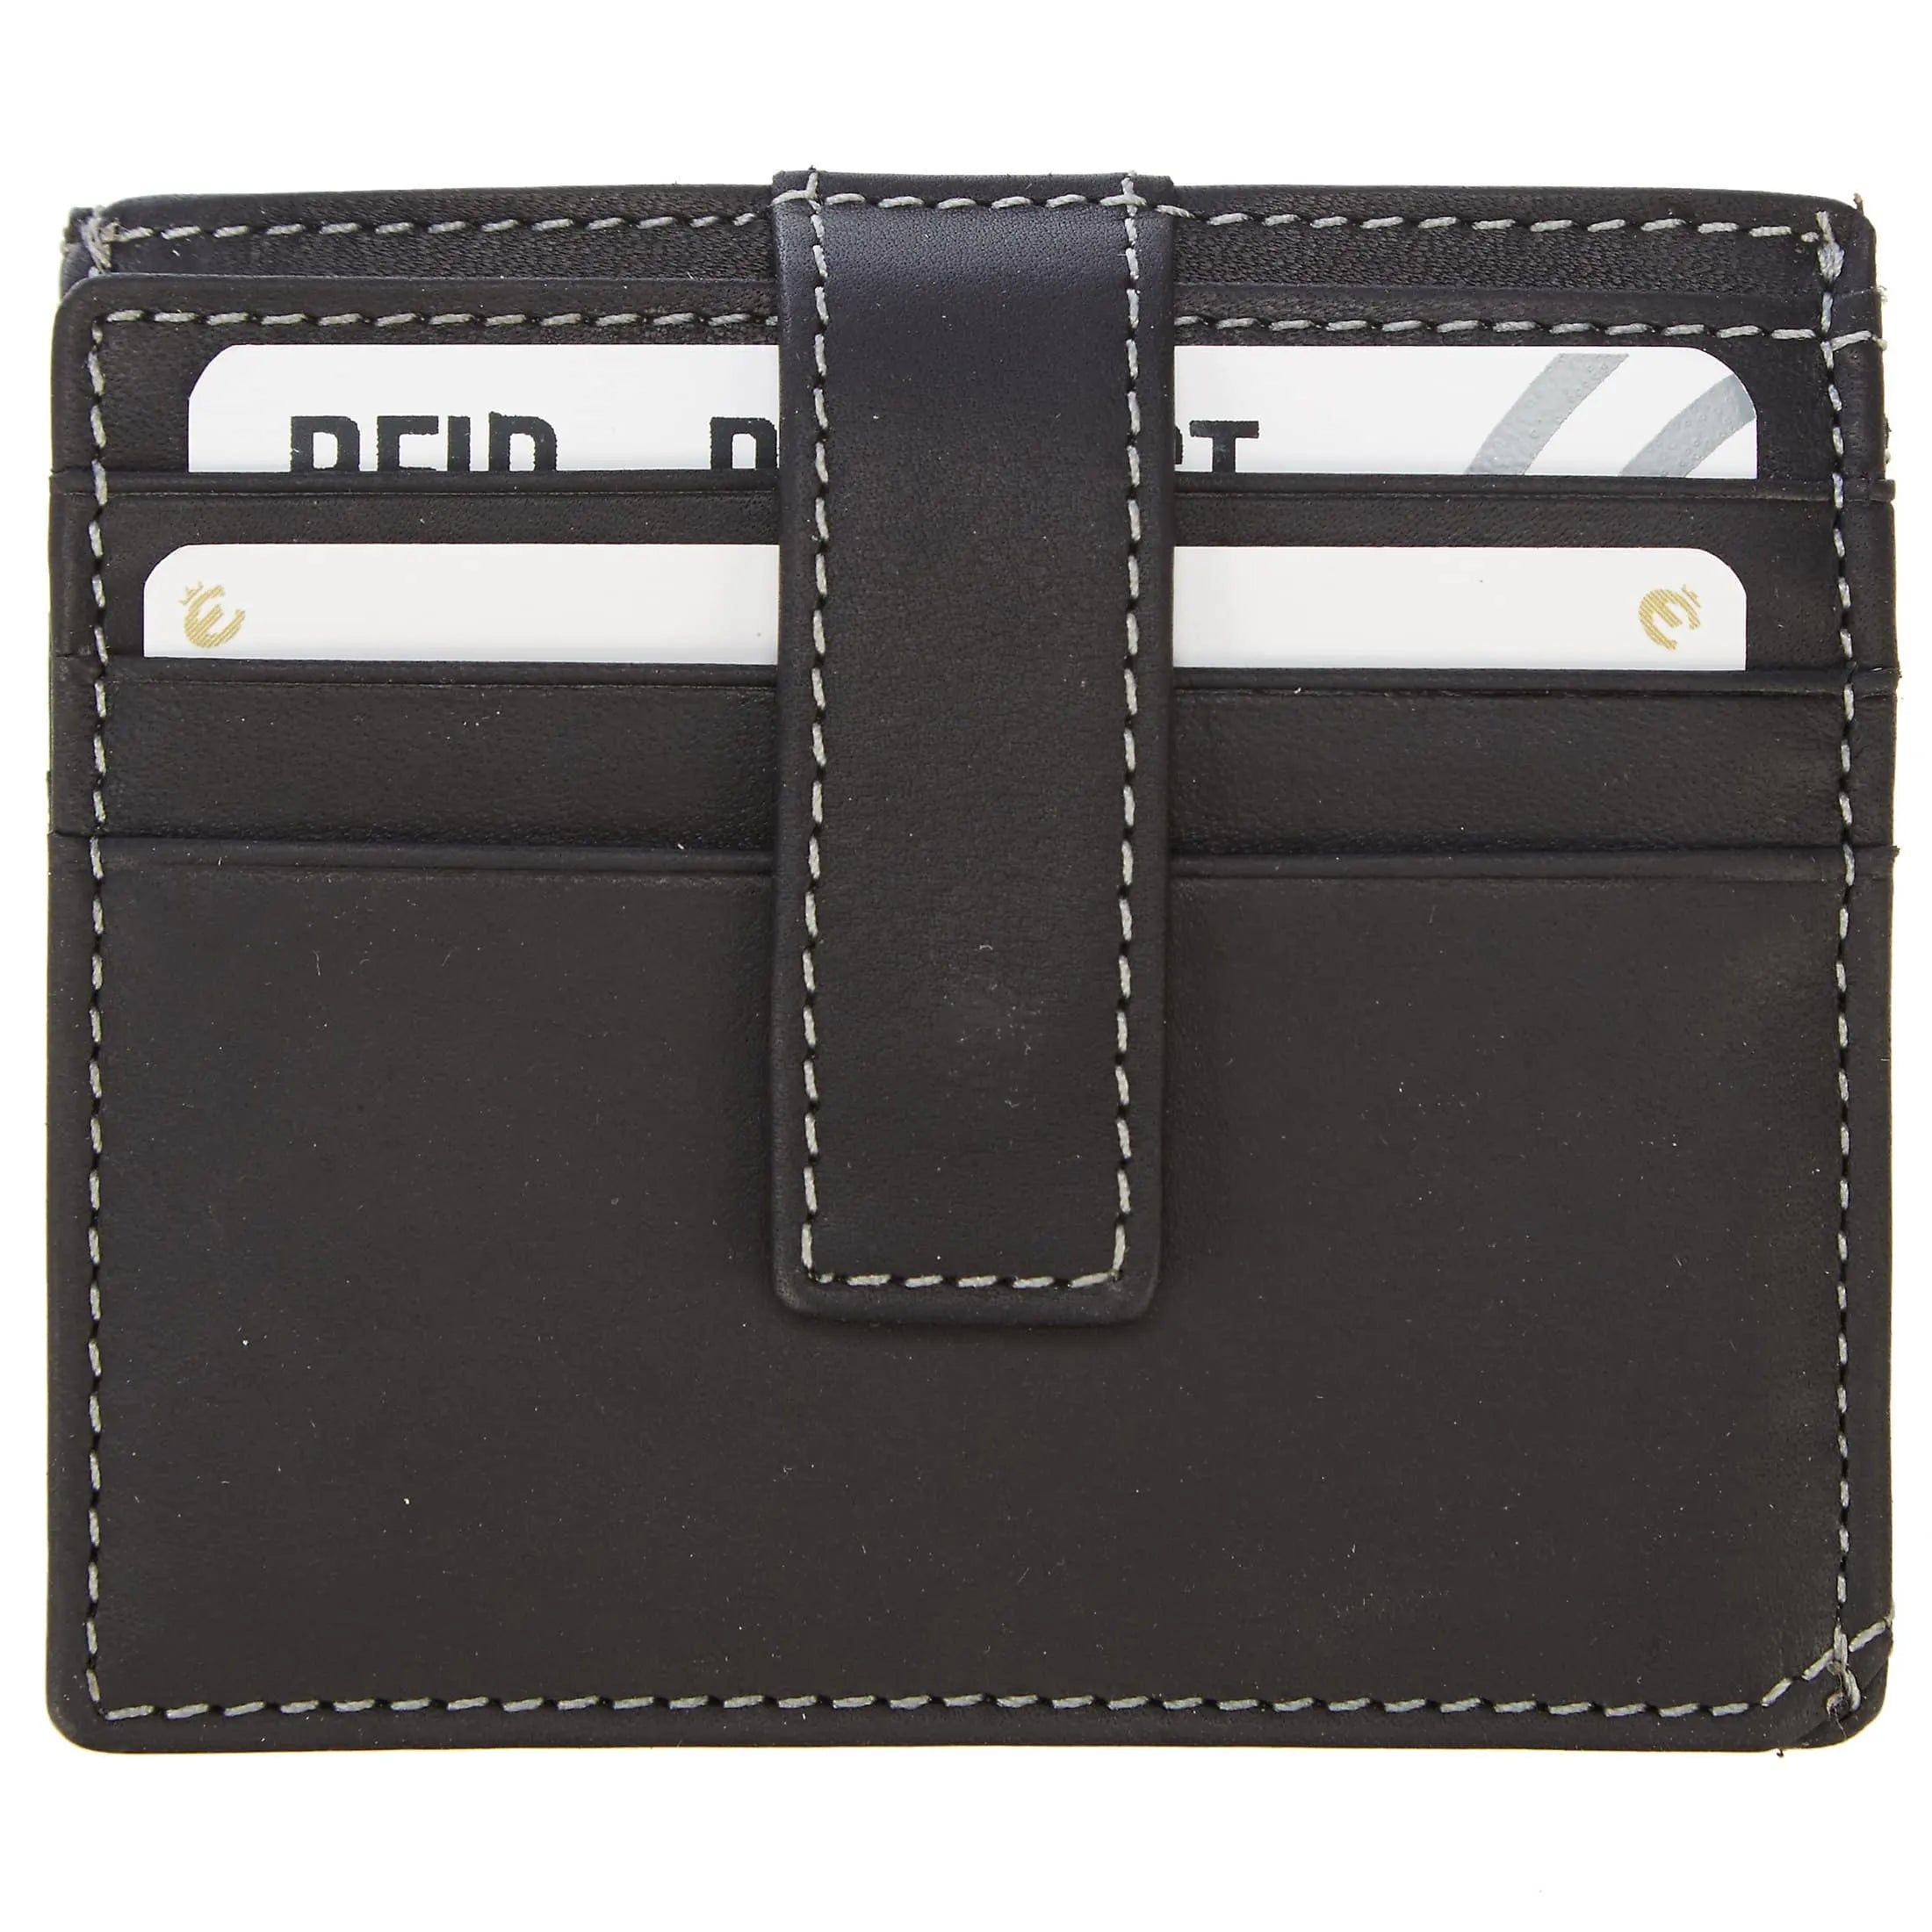 Esquire Oslo Dallas Kreditkartenetui RFID 10 cm - schwarz